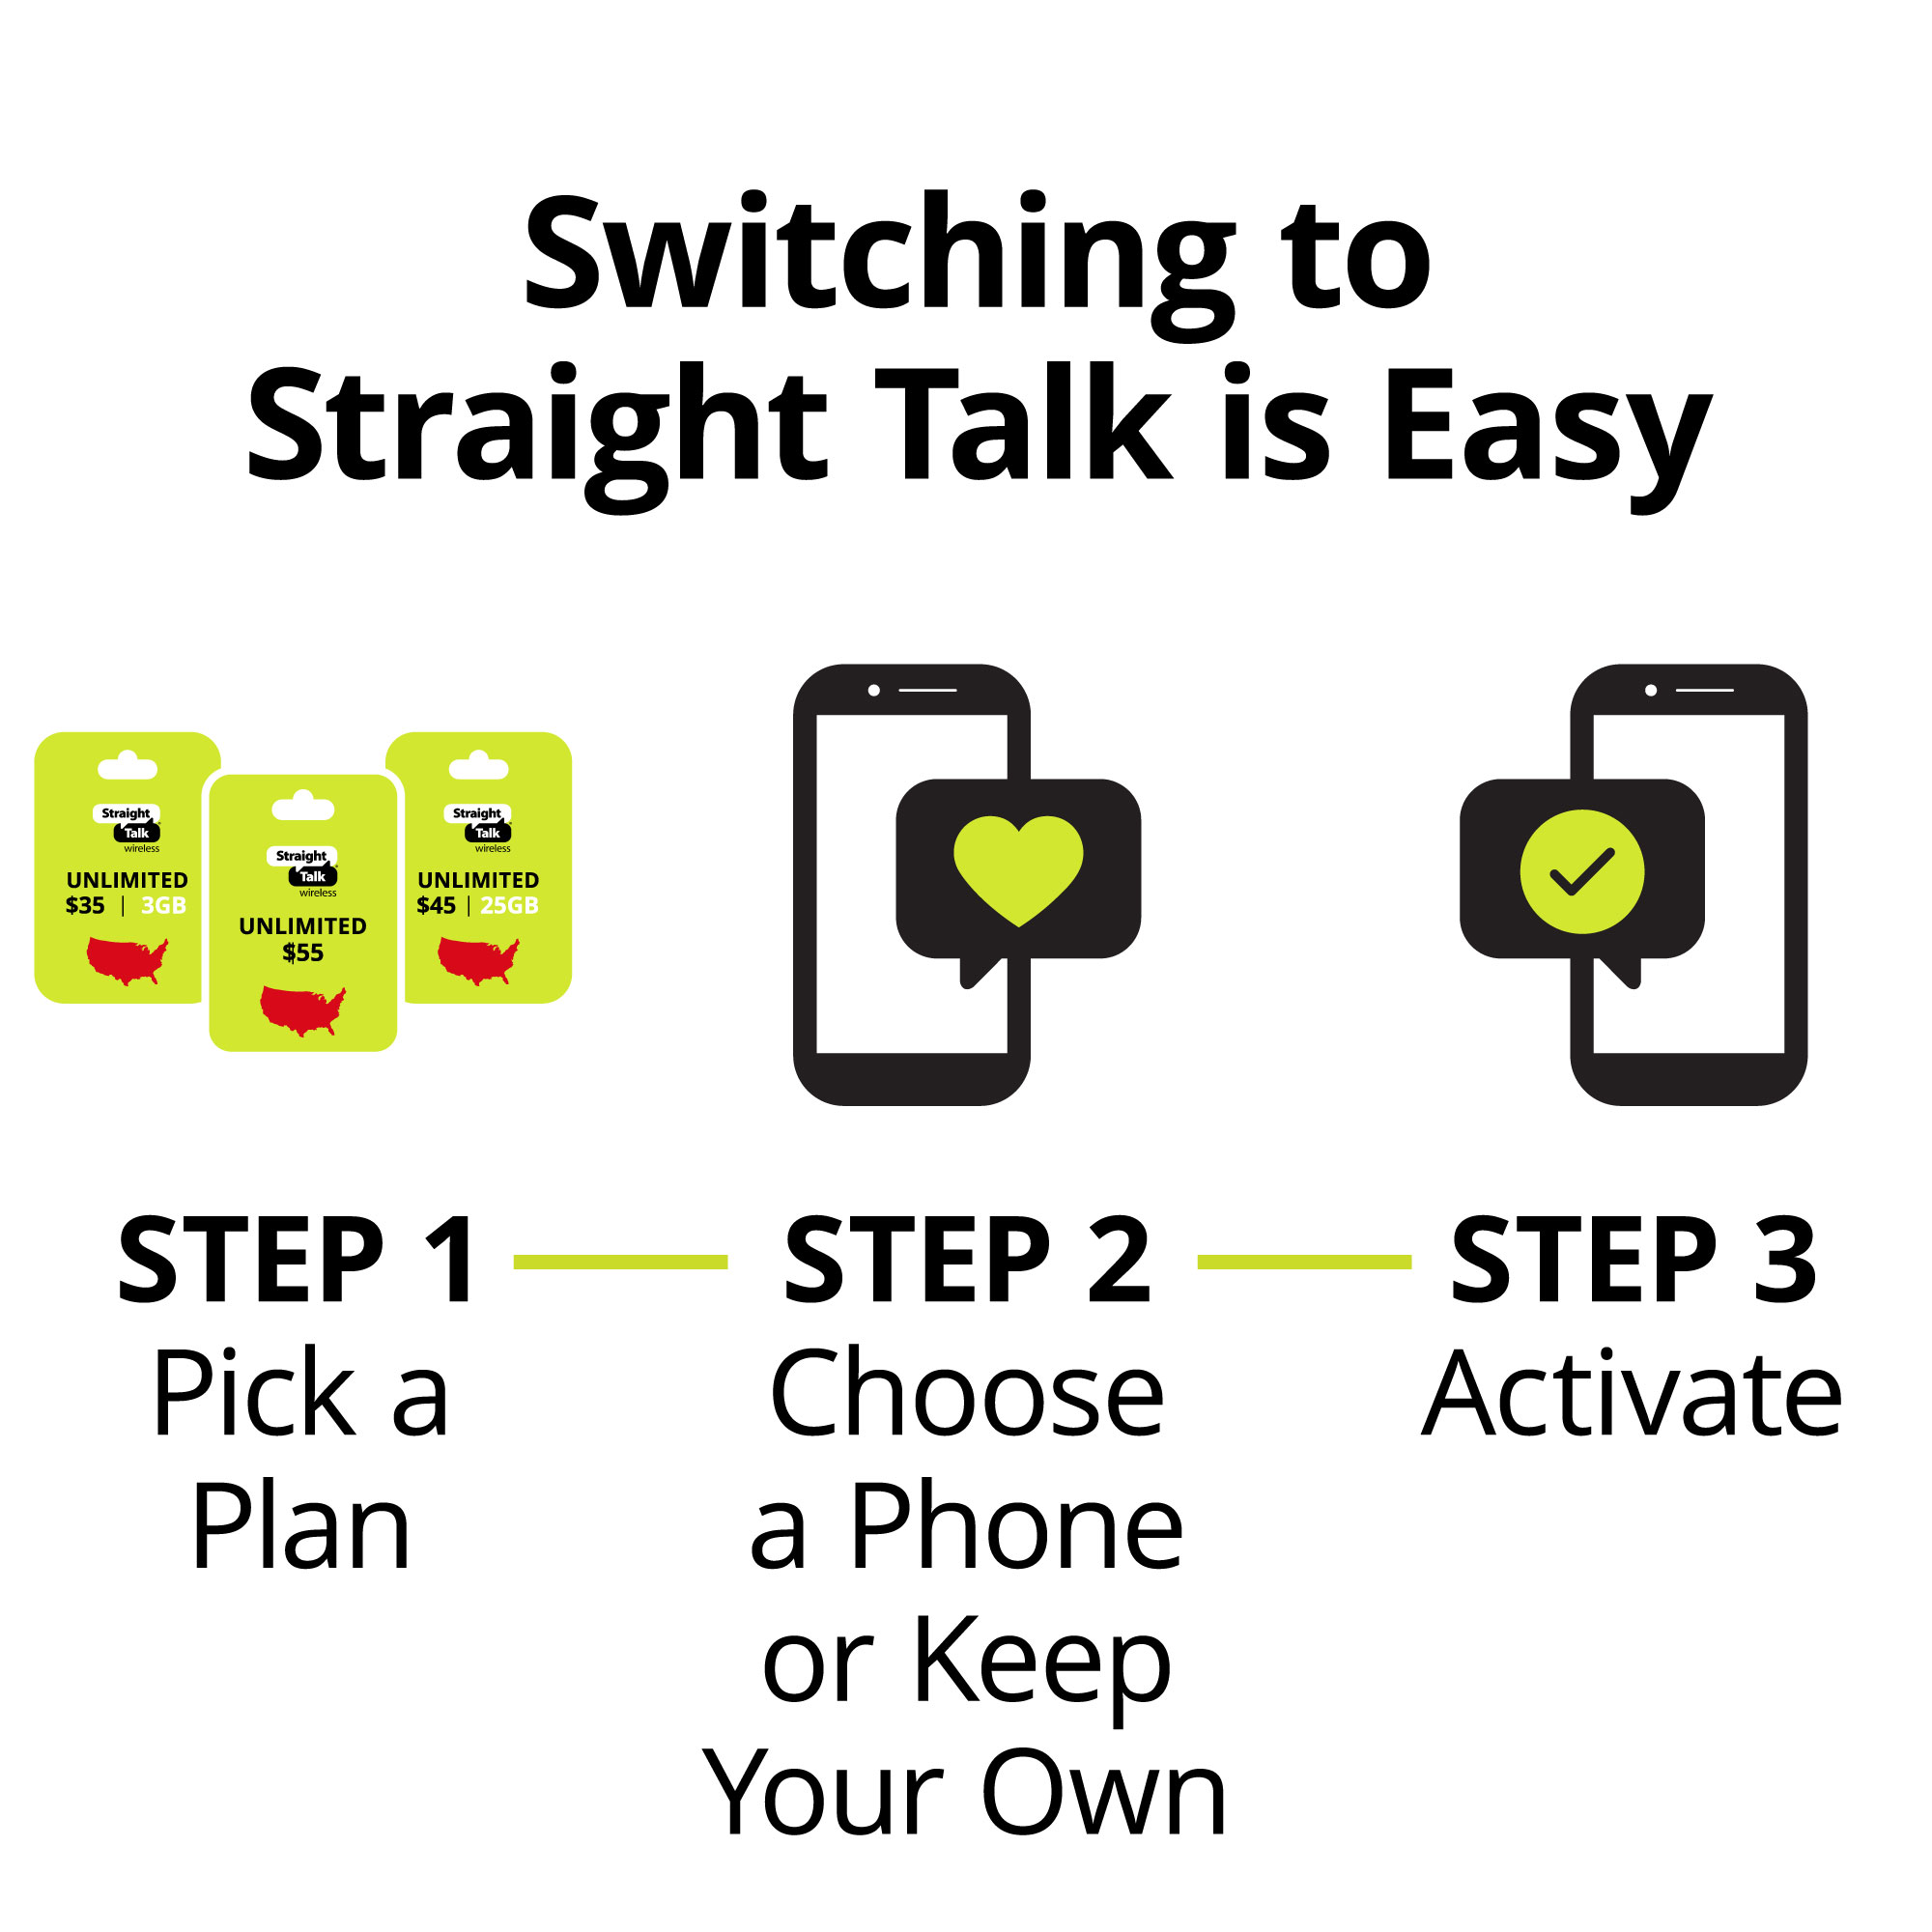 Straight Talk LG Journey, 16GB, Black- Prepaid Smartphone - image 5 of 9